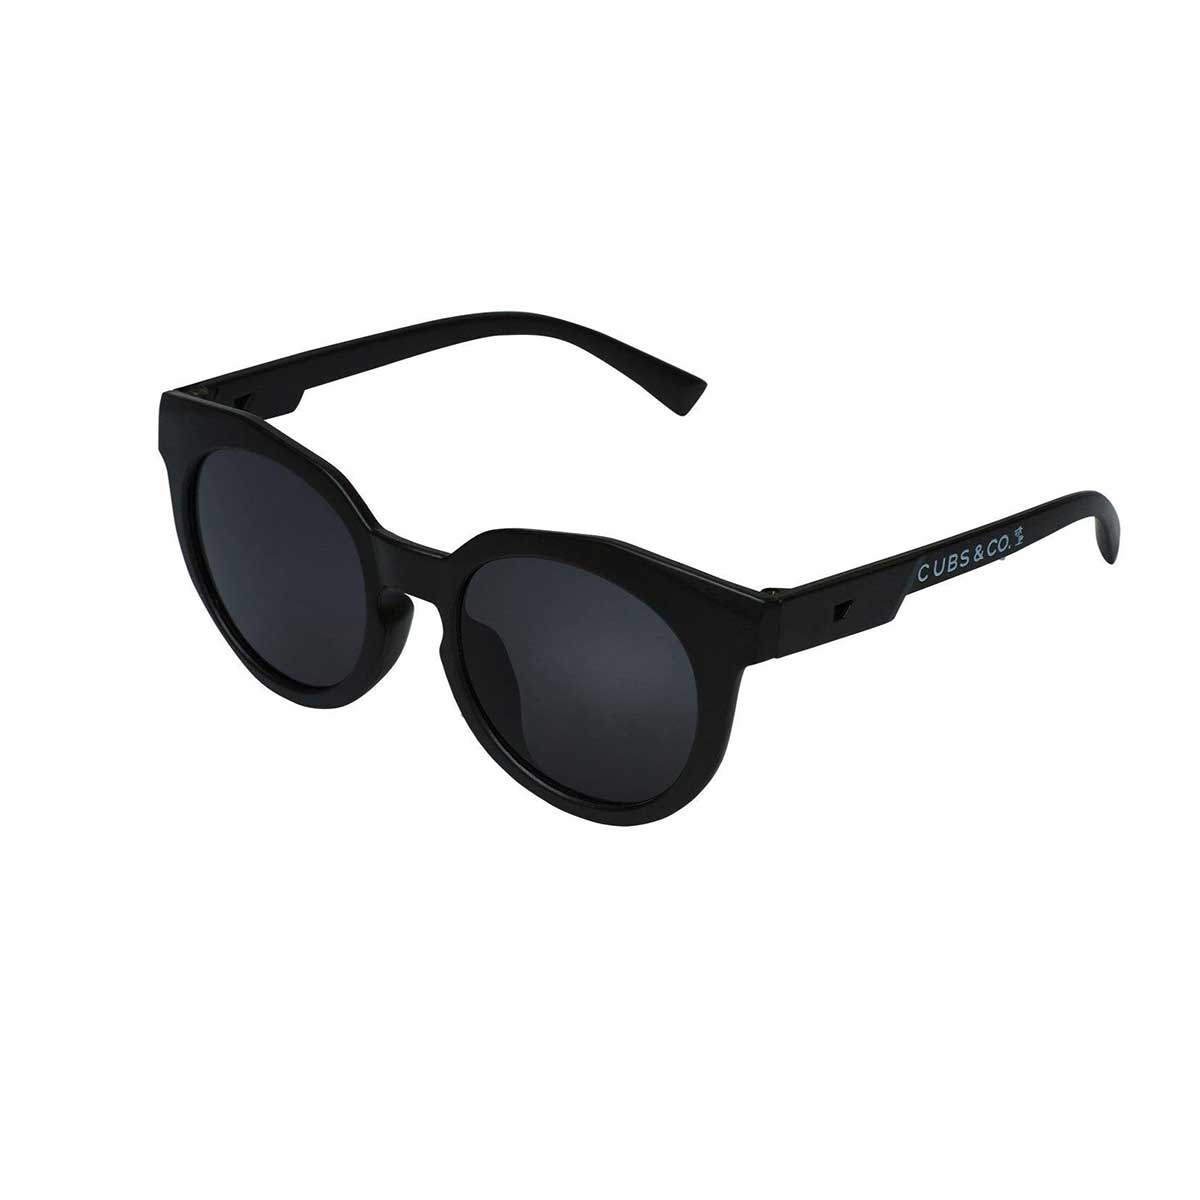 Buy Aviator Sunglasses for Kids Girls Boys Children, Blue Mirrored Lens,  Silver Metal Frame, UV Protection at Amazon.in